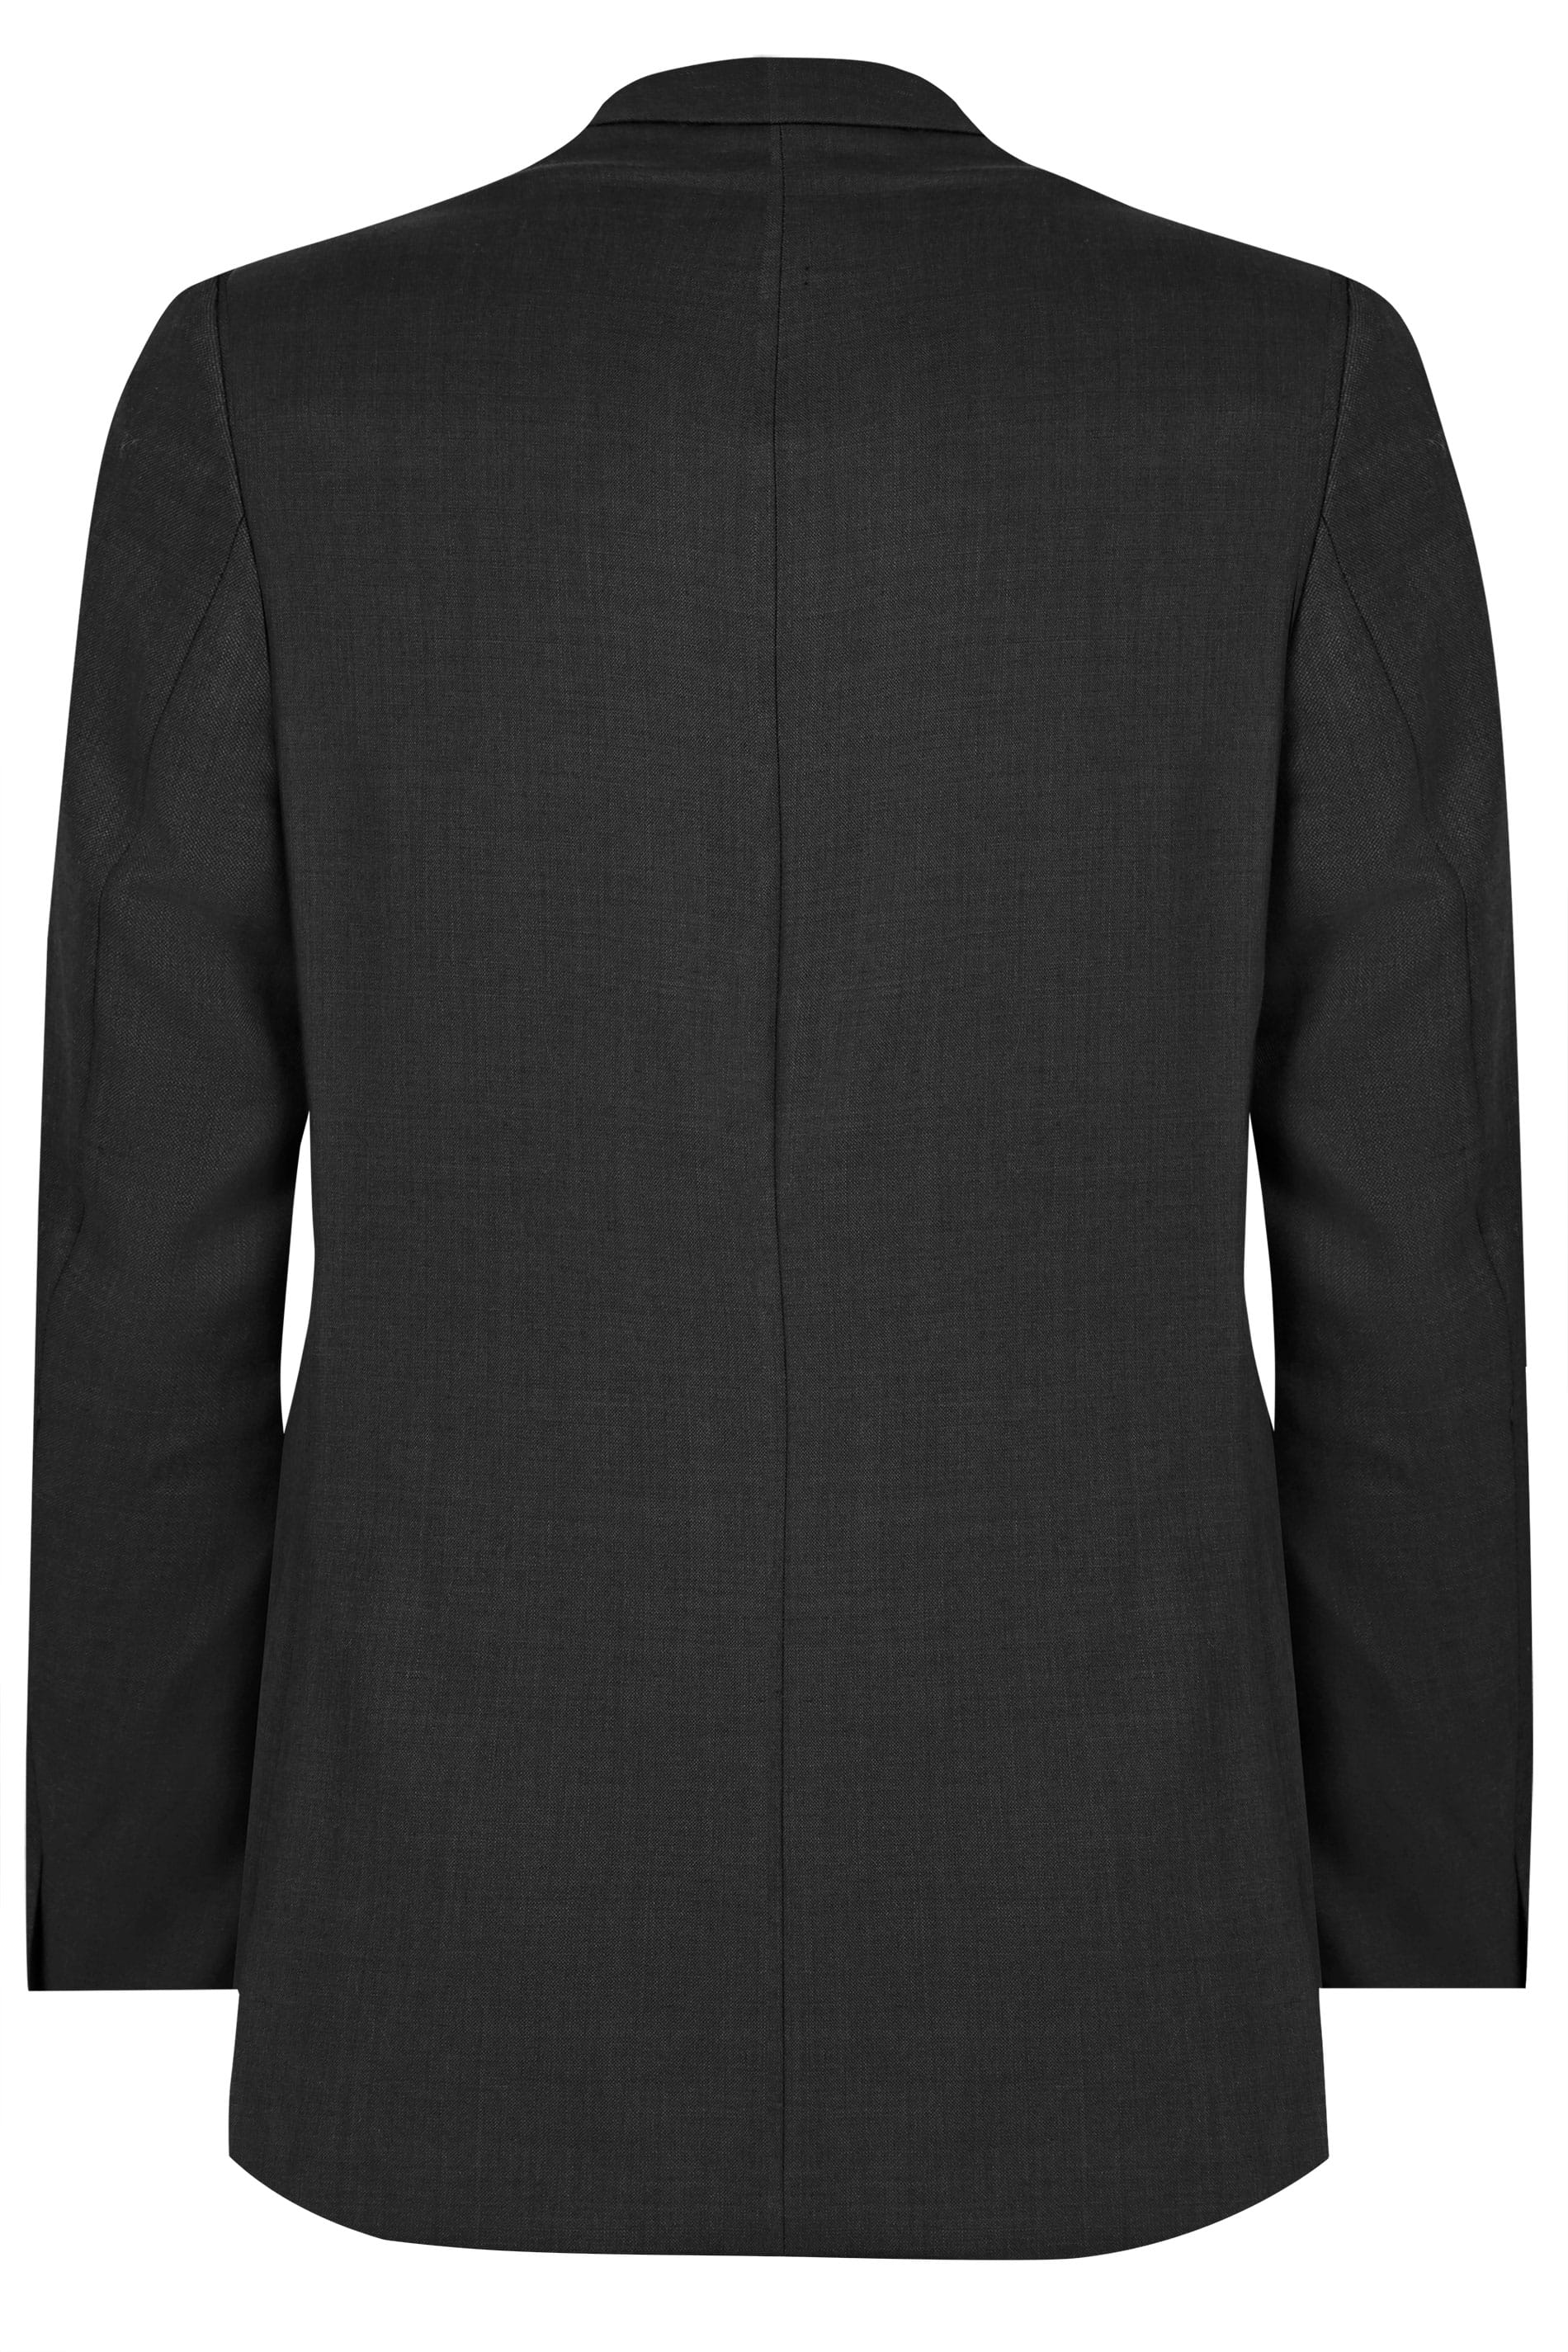 BadRhino Black Regular Suit Jacket | Sizes 44